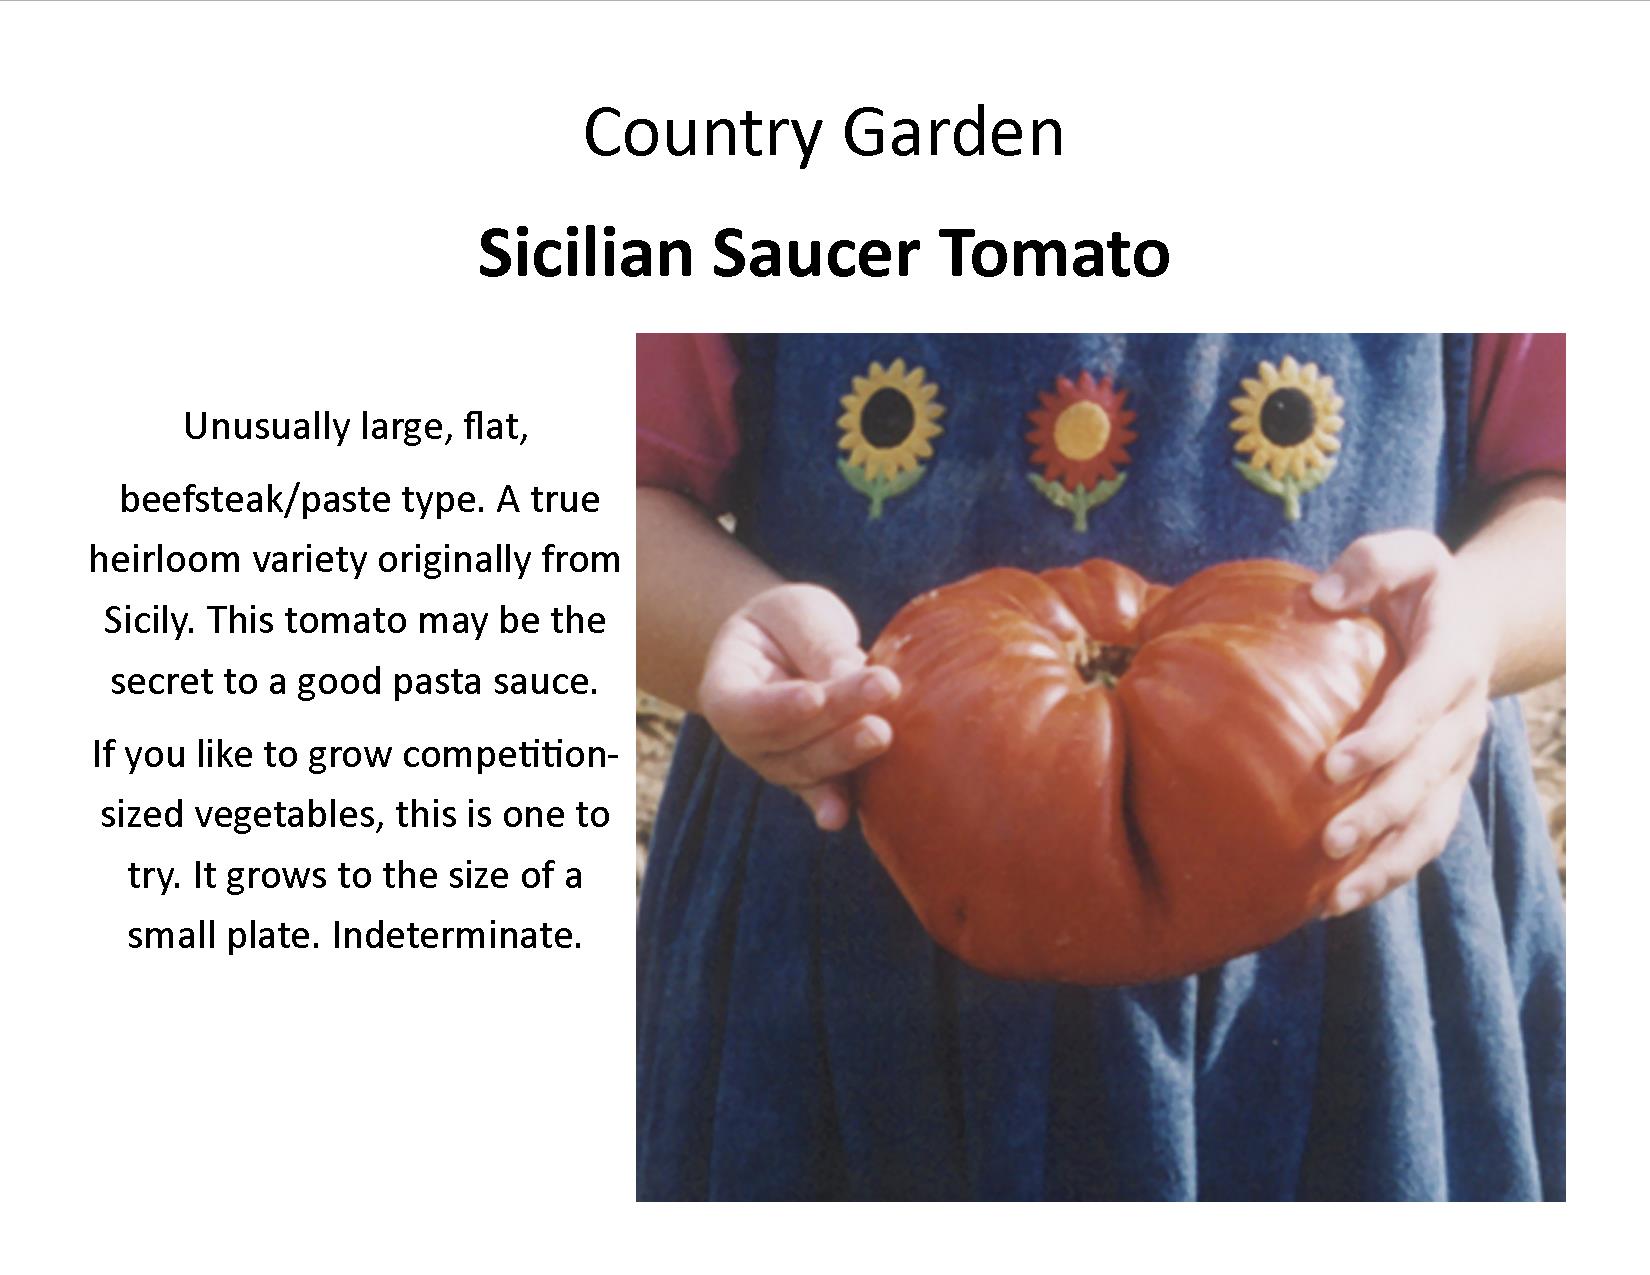 Tomato Sicilian Saucer